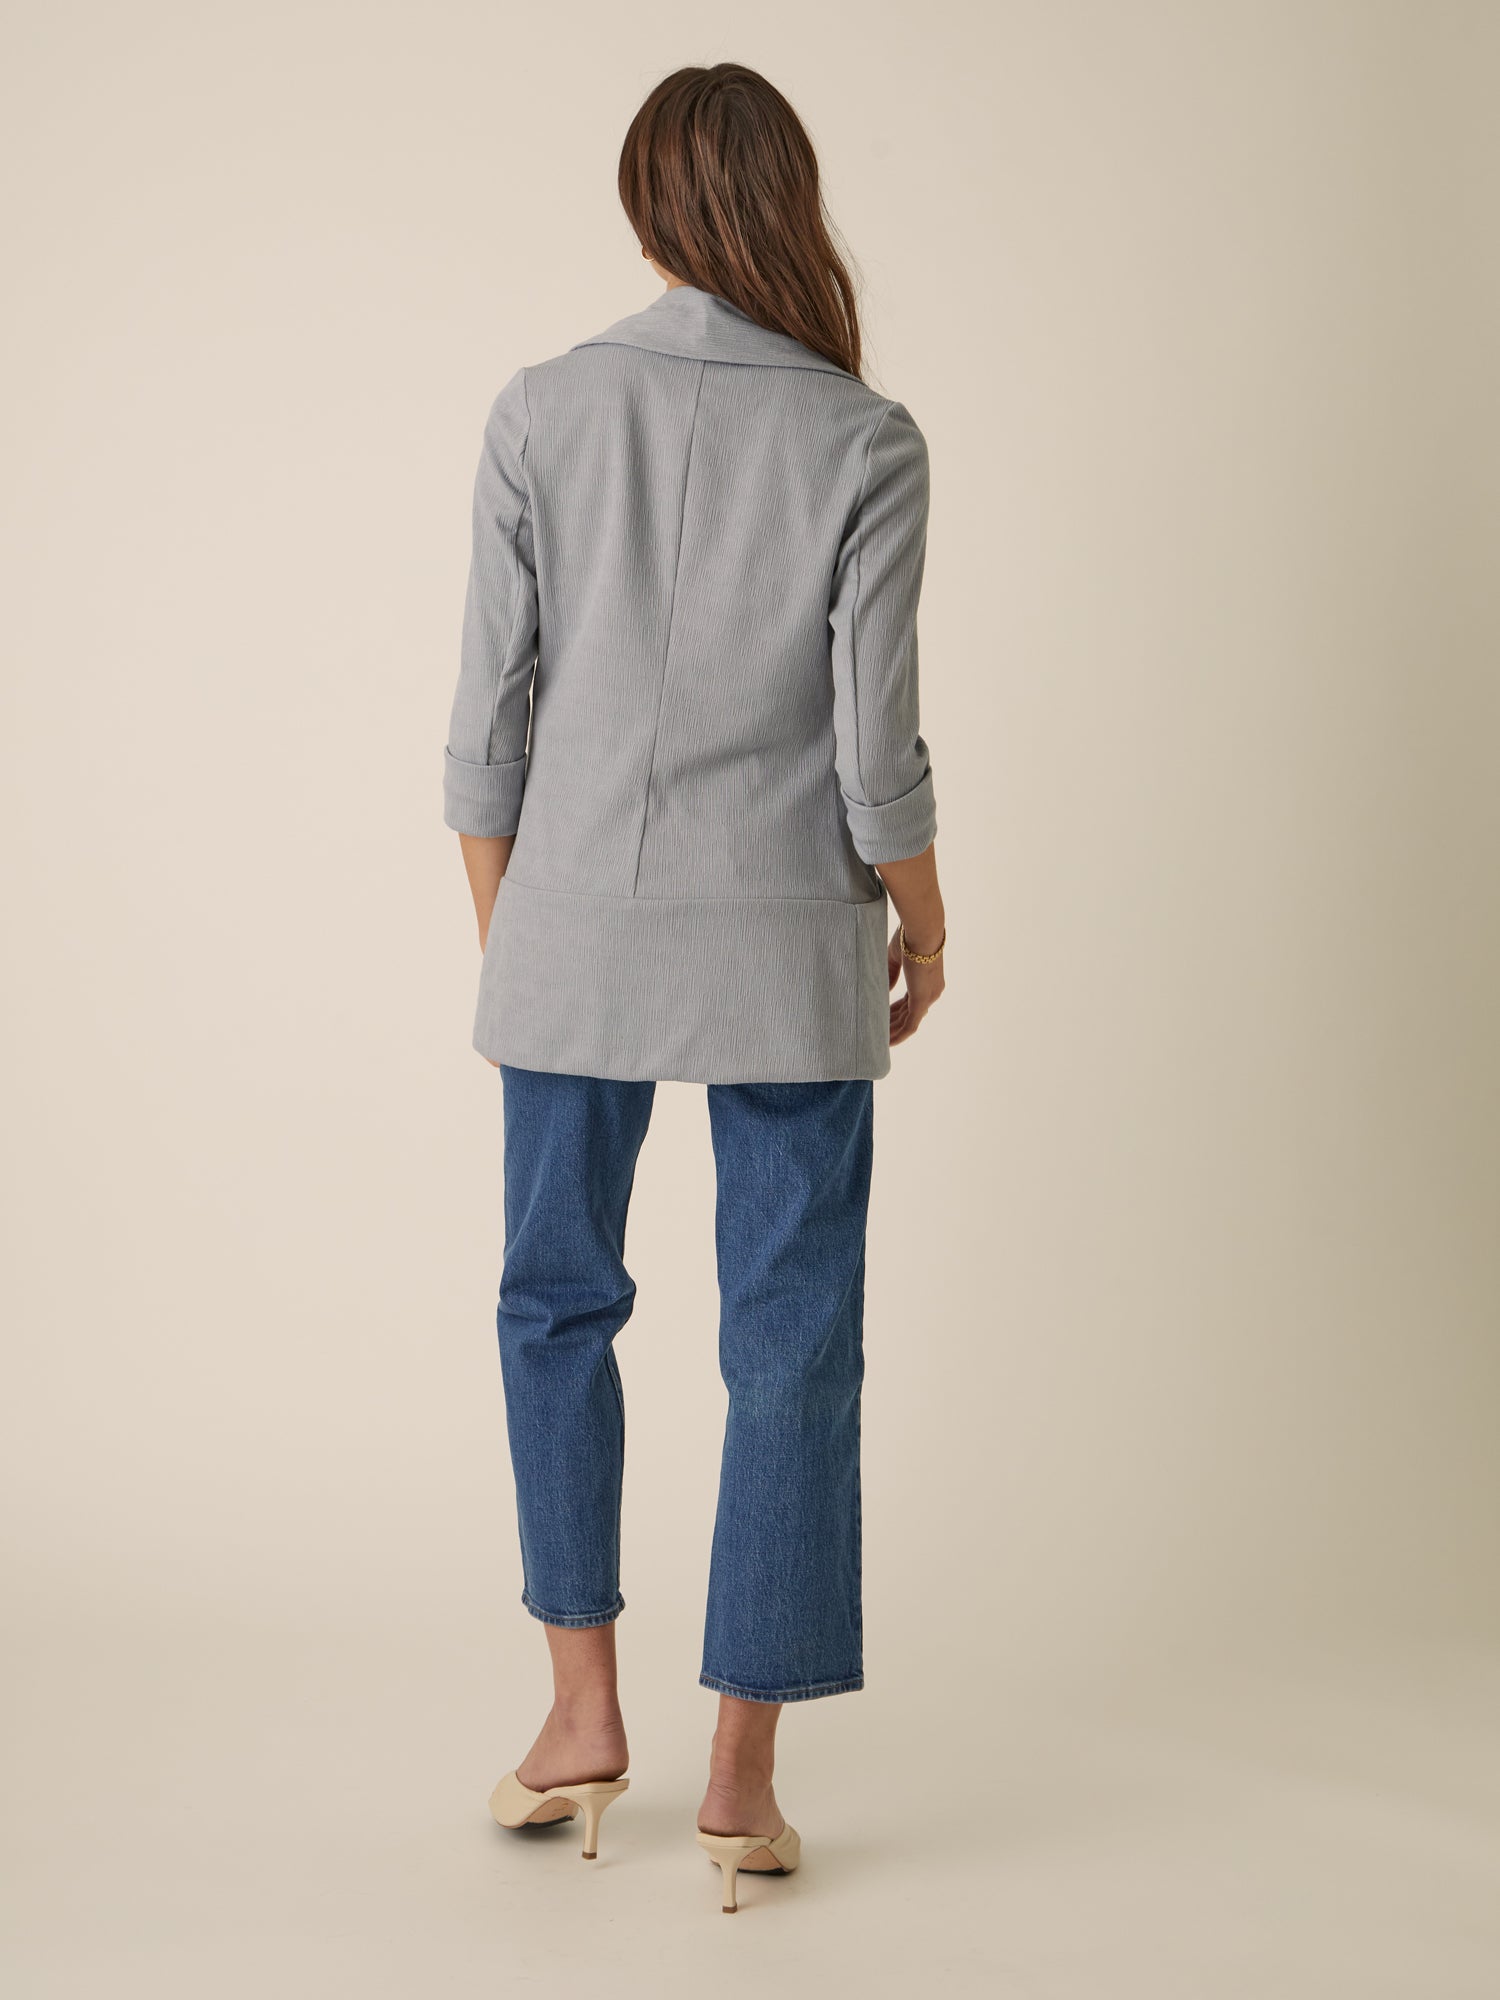 Classic Melanie Shawl Simple Staple Dusty Blue Workwear Blazer Jacket Everyday Shawl Front Pockets Best Seller Customer Favorite Casual Style